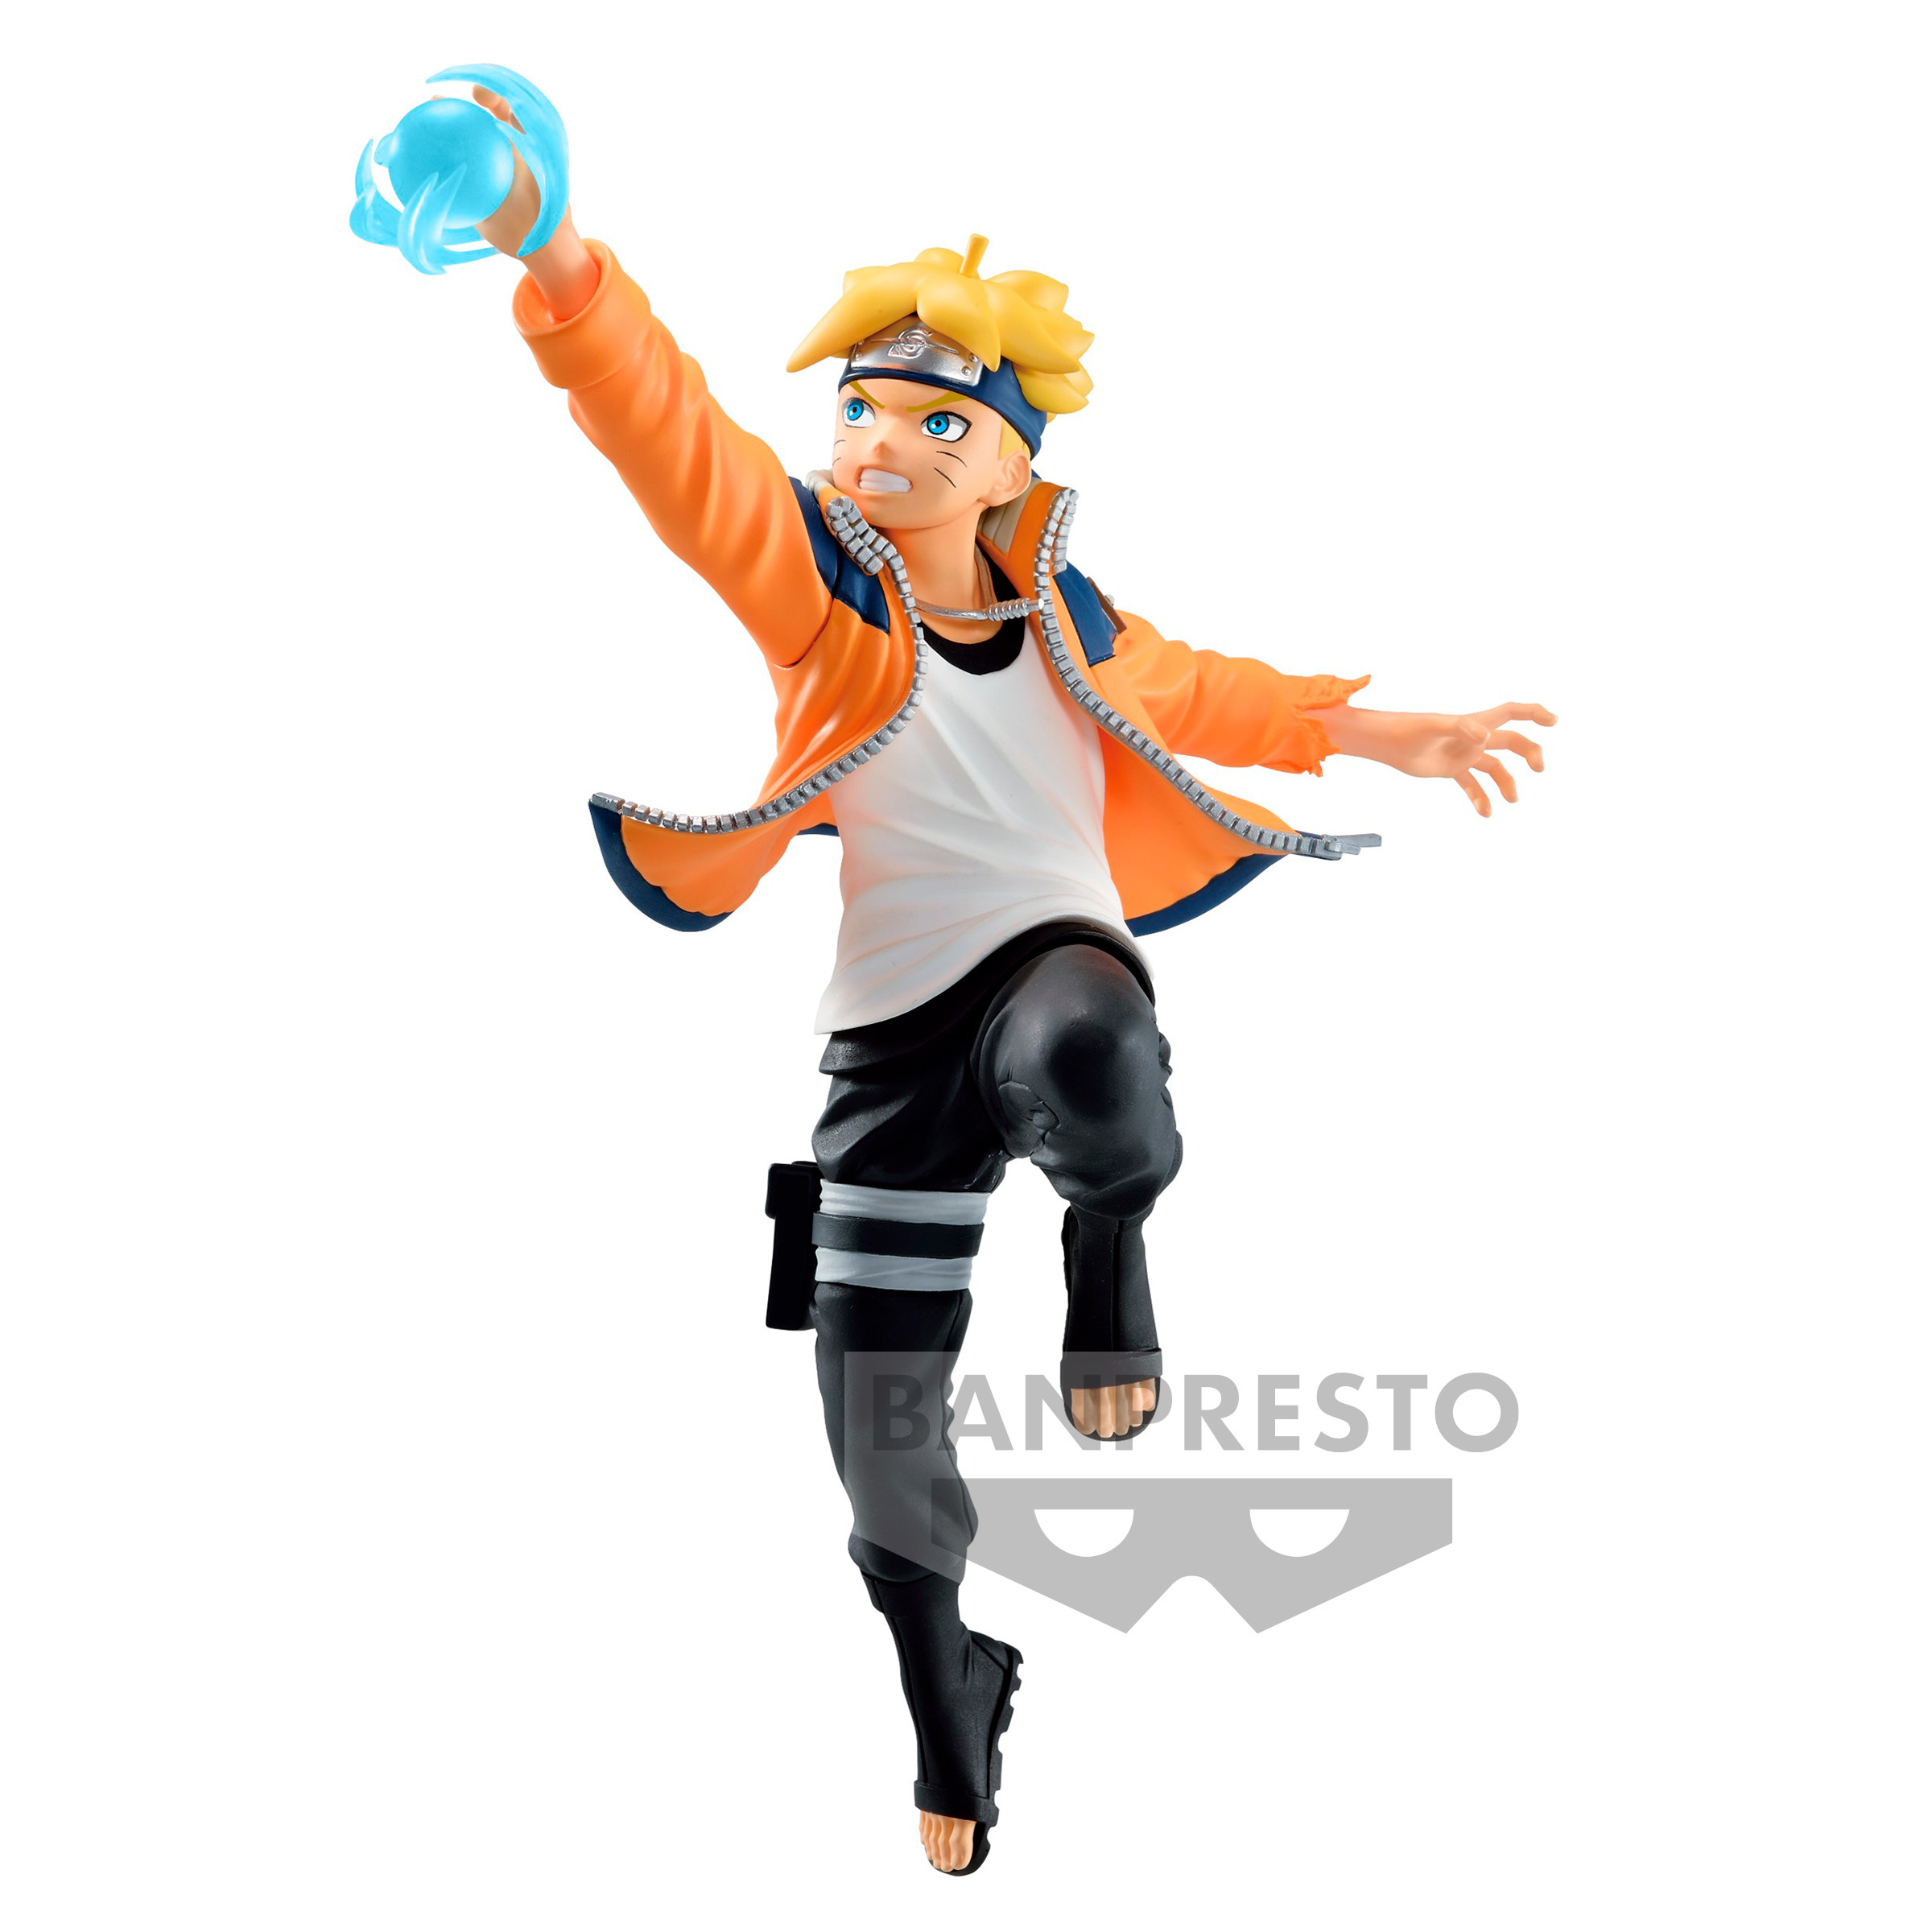 Figurine Uzumaki Boruto - Boruto : Naruto Next Generations - Vibration  Stars Ver.B